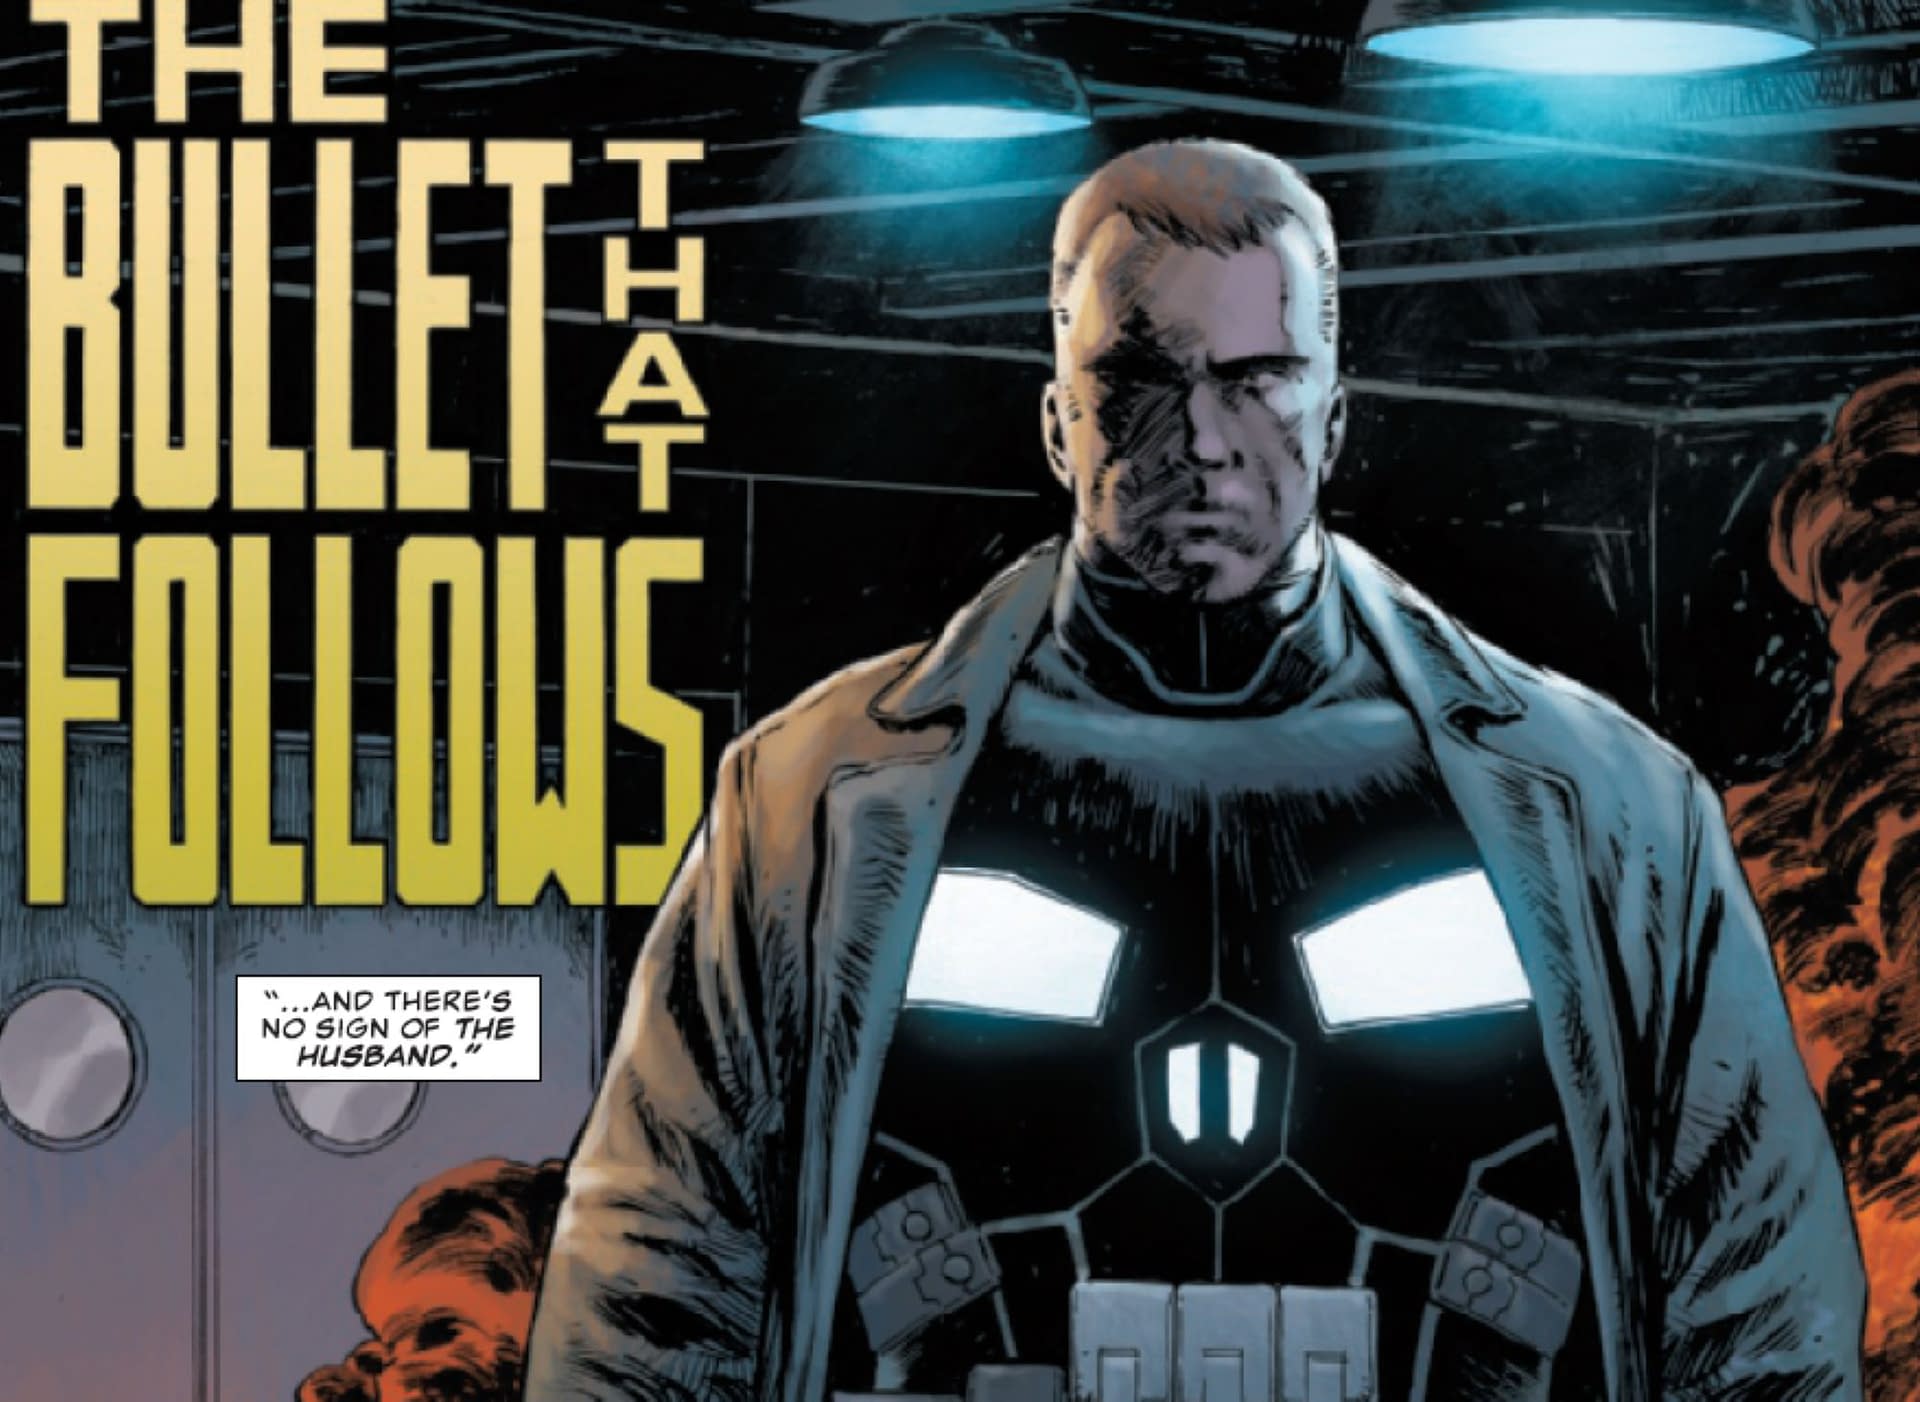 The Punisher's New Skull Logo Debuts in Surprising Marvel Comic Series